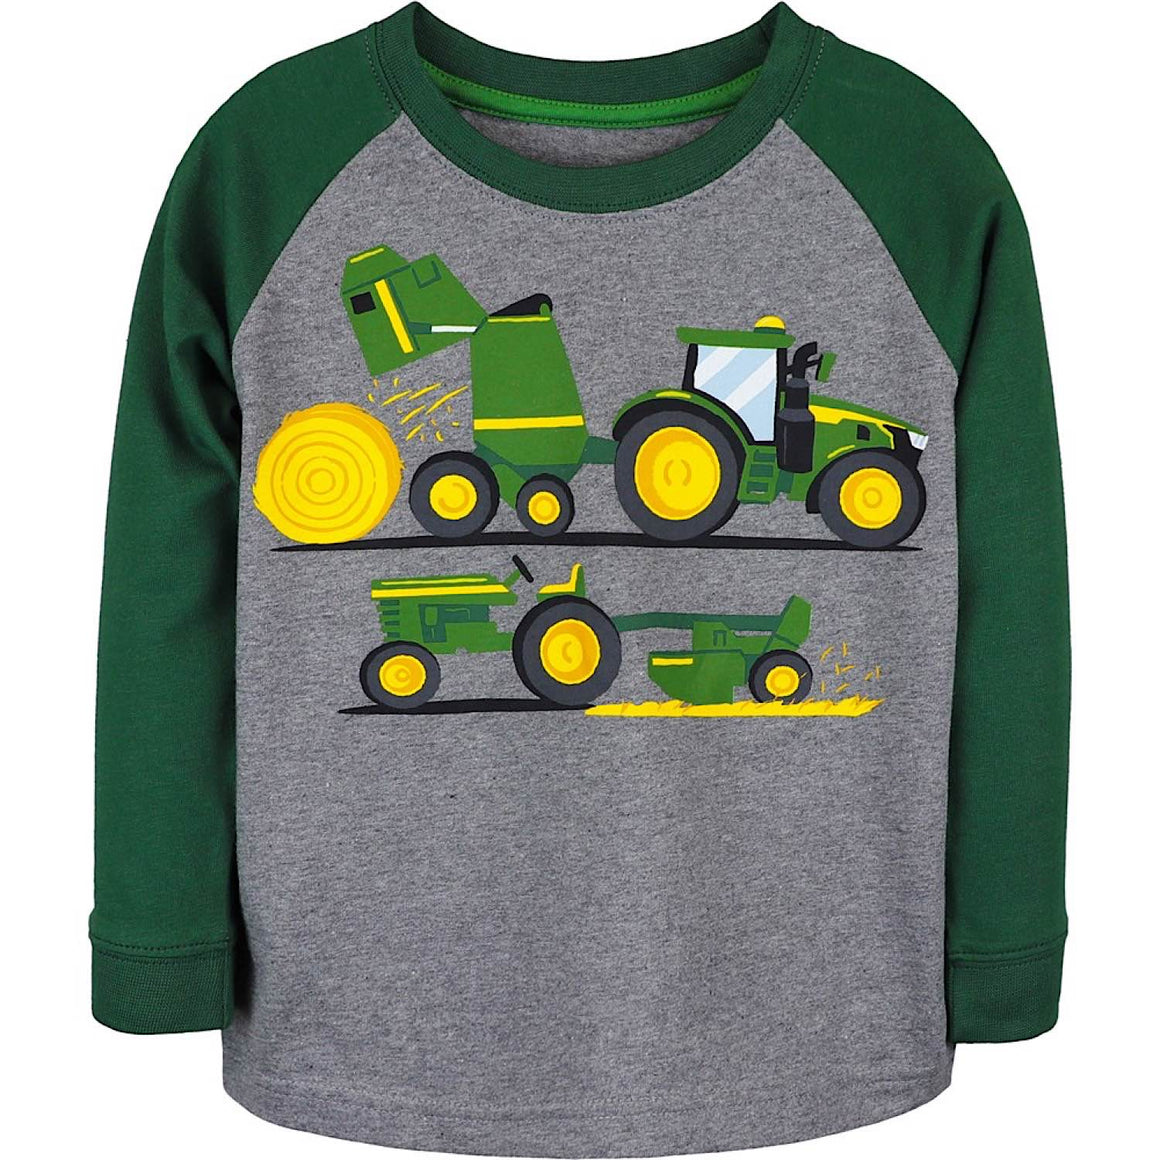 John Deere Toddler Hay Baler Long Sleeve T-Shirt - Grey/Green